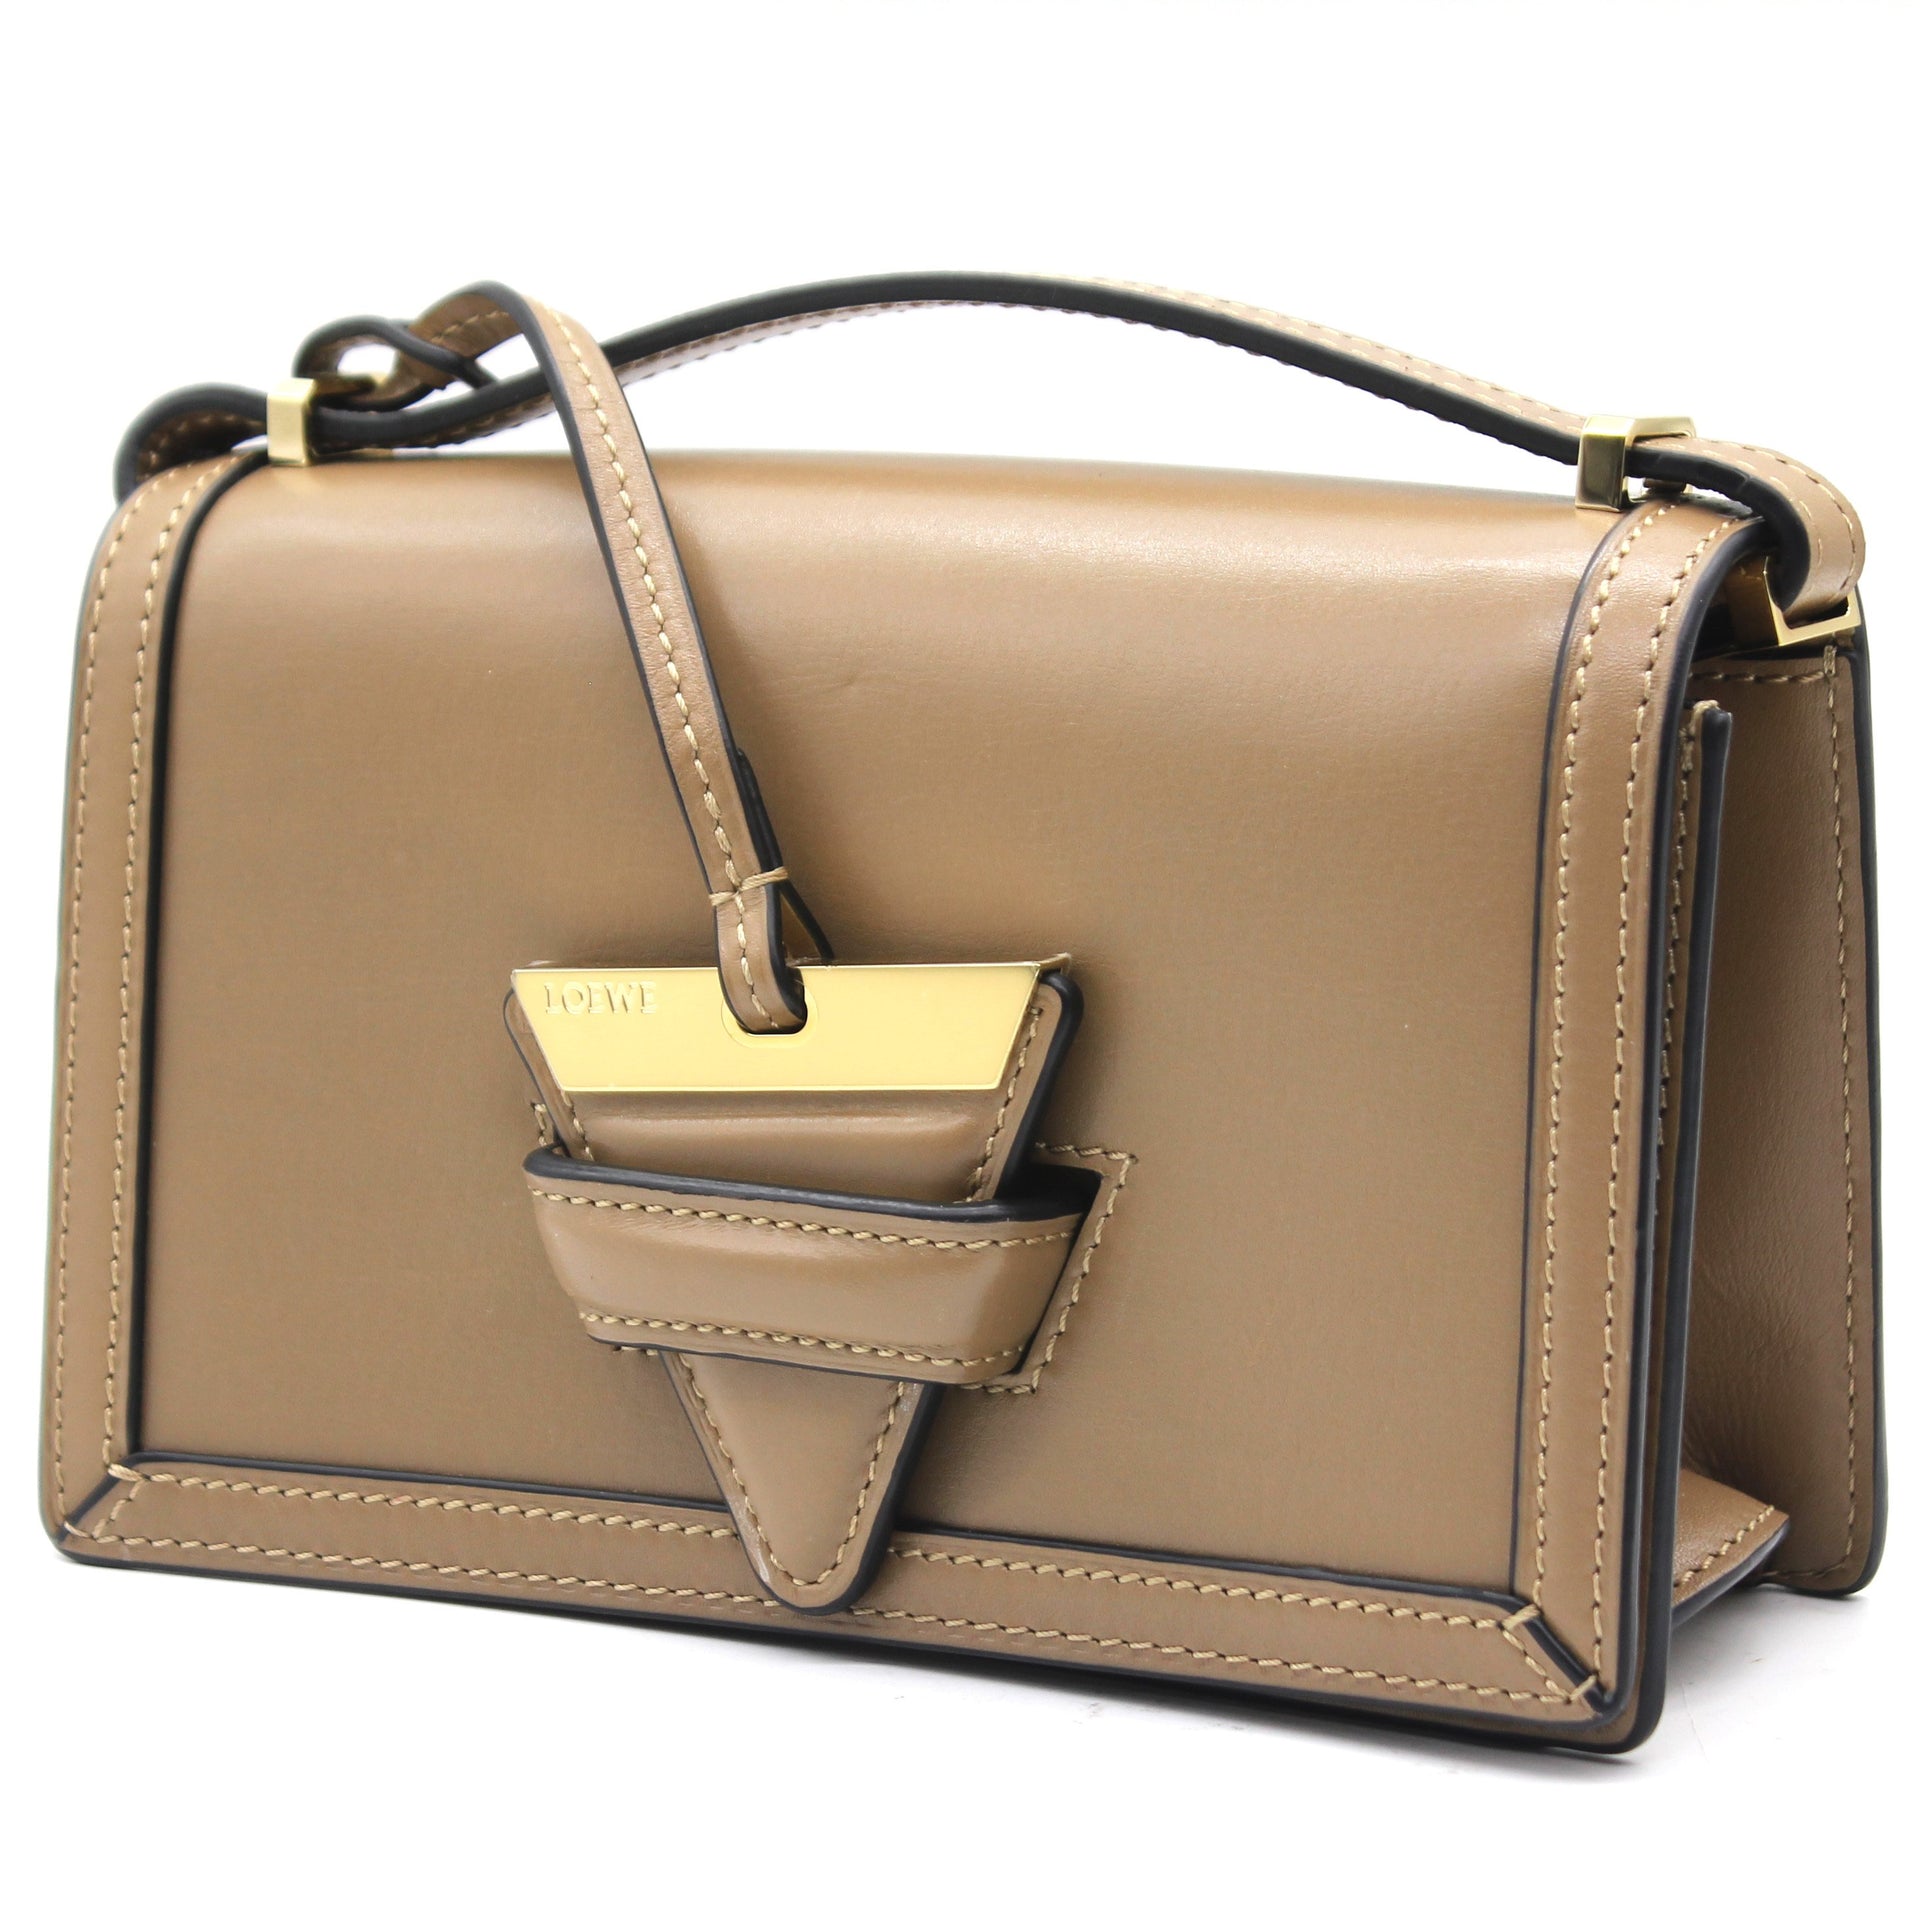 Loewe Barcelona Small Leather Bag